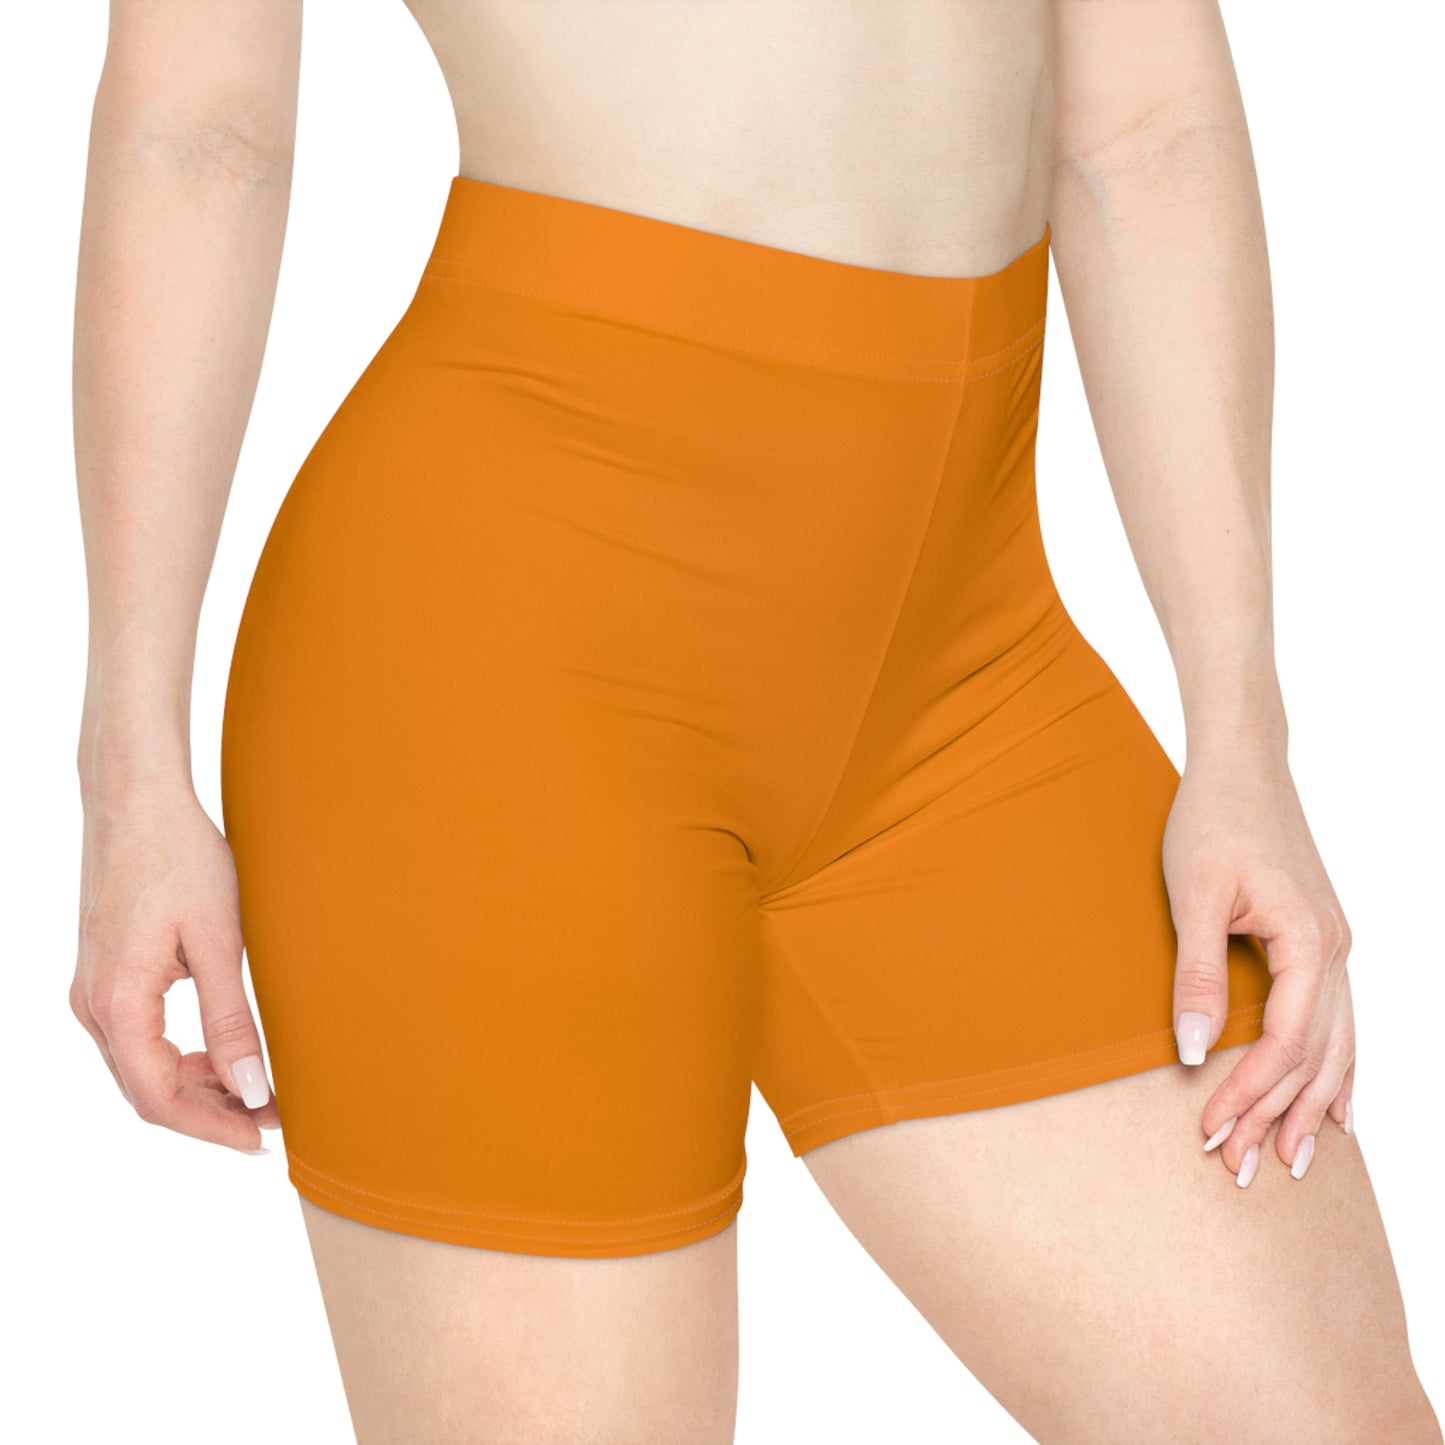 Tangerine Women's Biker Shorts